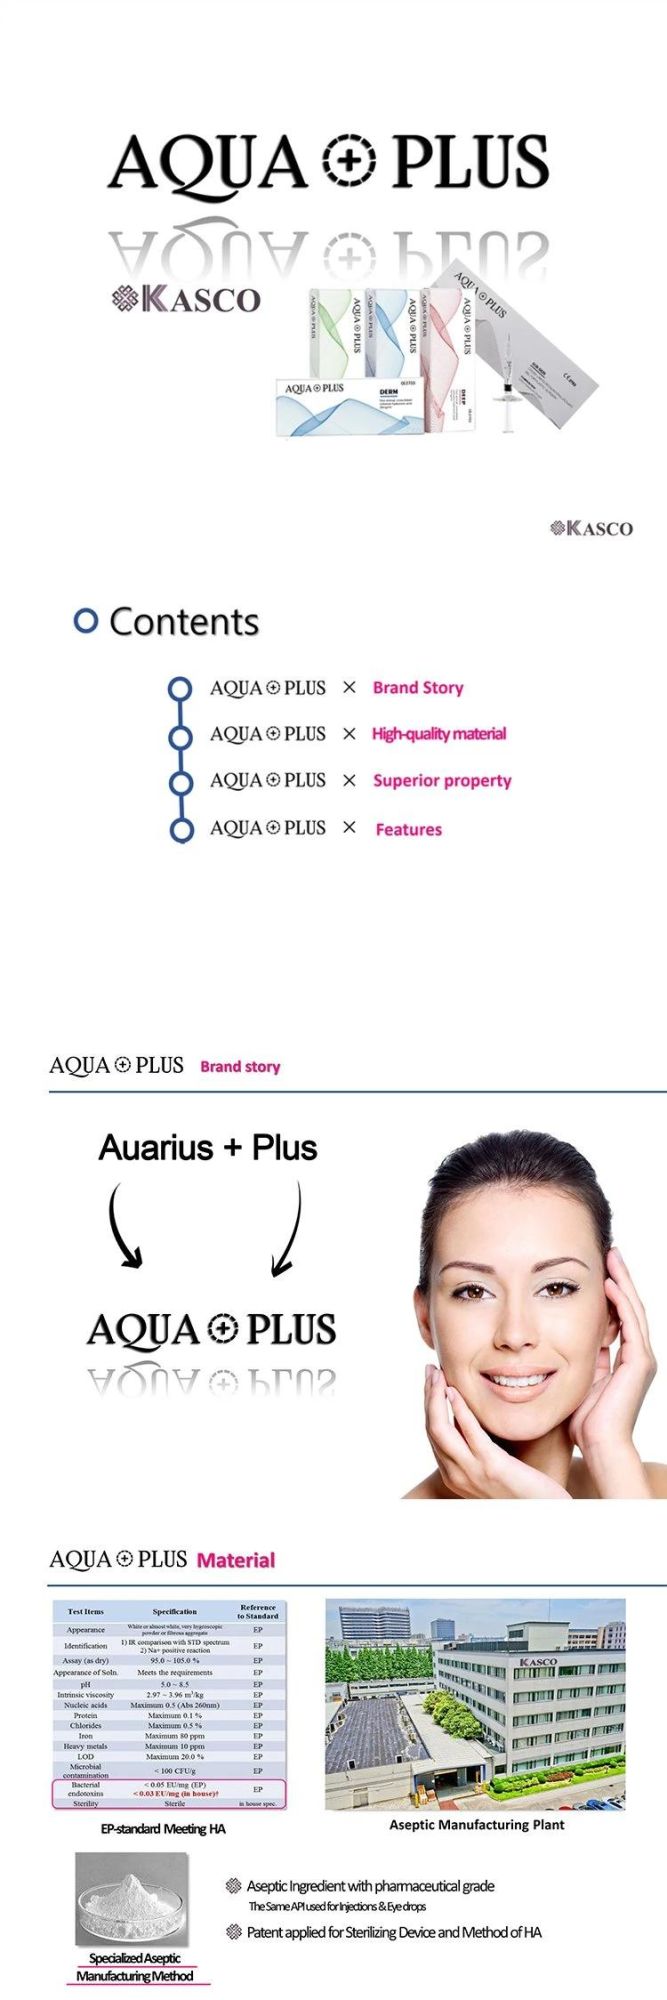 Aqua Plus Beauty Product 1ml Dermal Filler Injections Hyaluronic Acid Anti Wrinkle